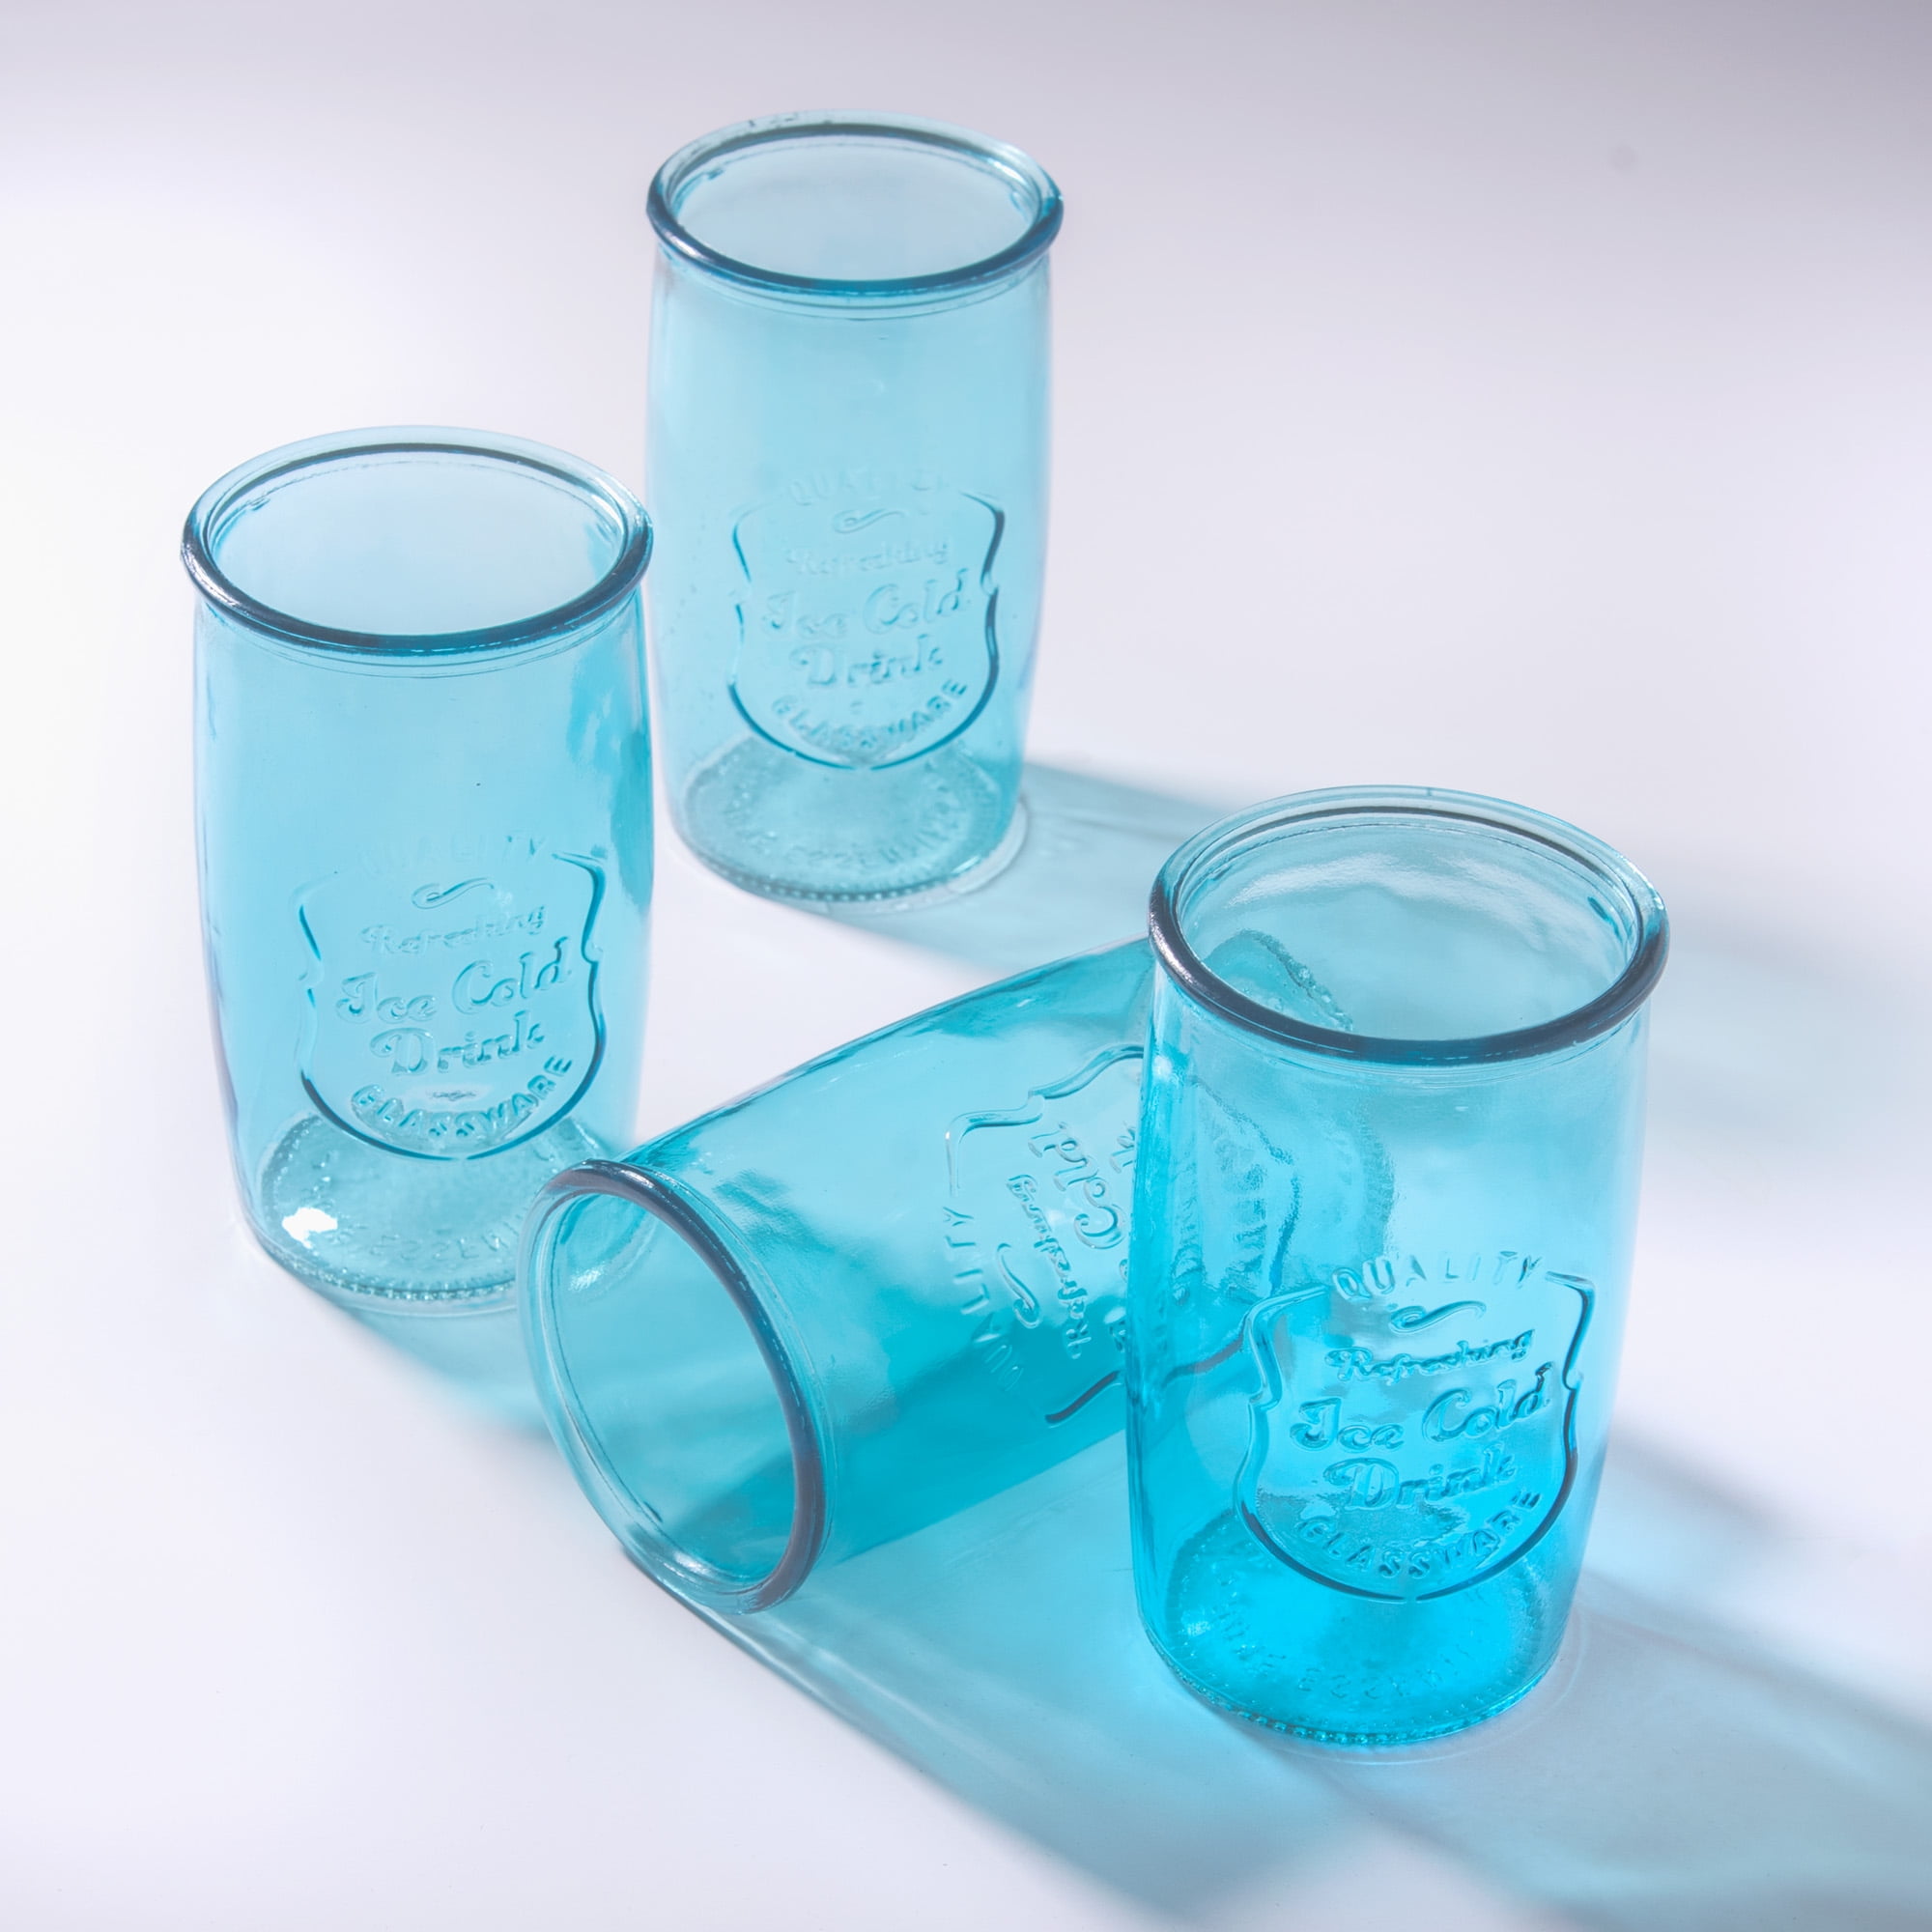 Glaver's Drinking Glasses Set of 8 Mixed Glassware Set, 4 Highballs 17 Oz.,  4 Whiskey Glasses 13 Oz.…See more Glaver's Drinking Glasses Set of 8 Mixed